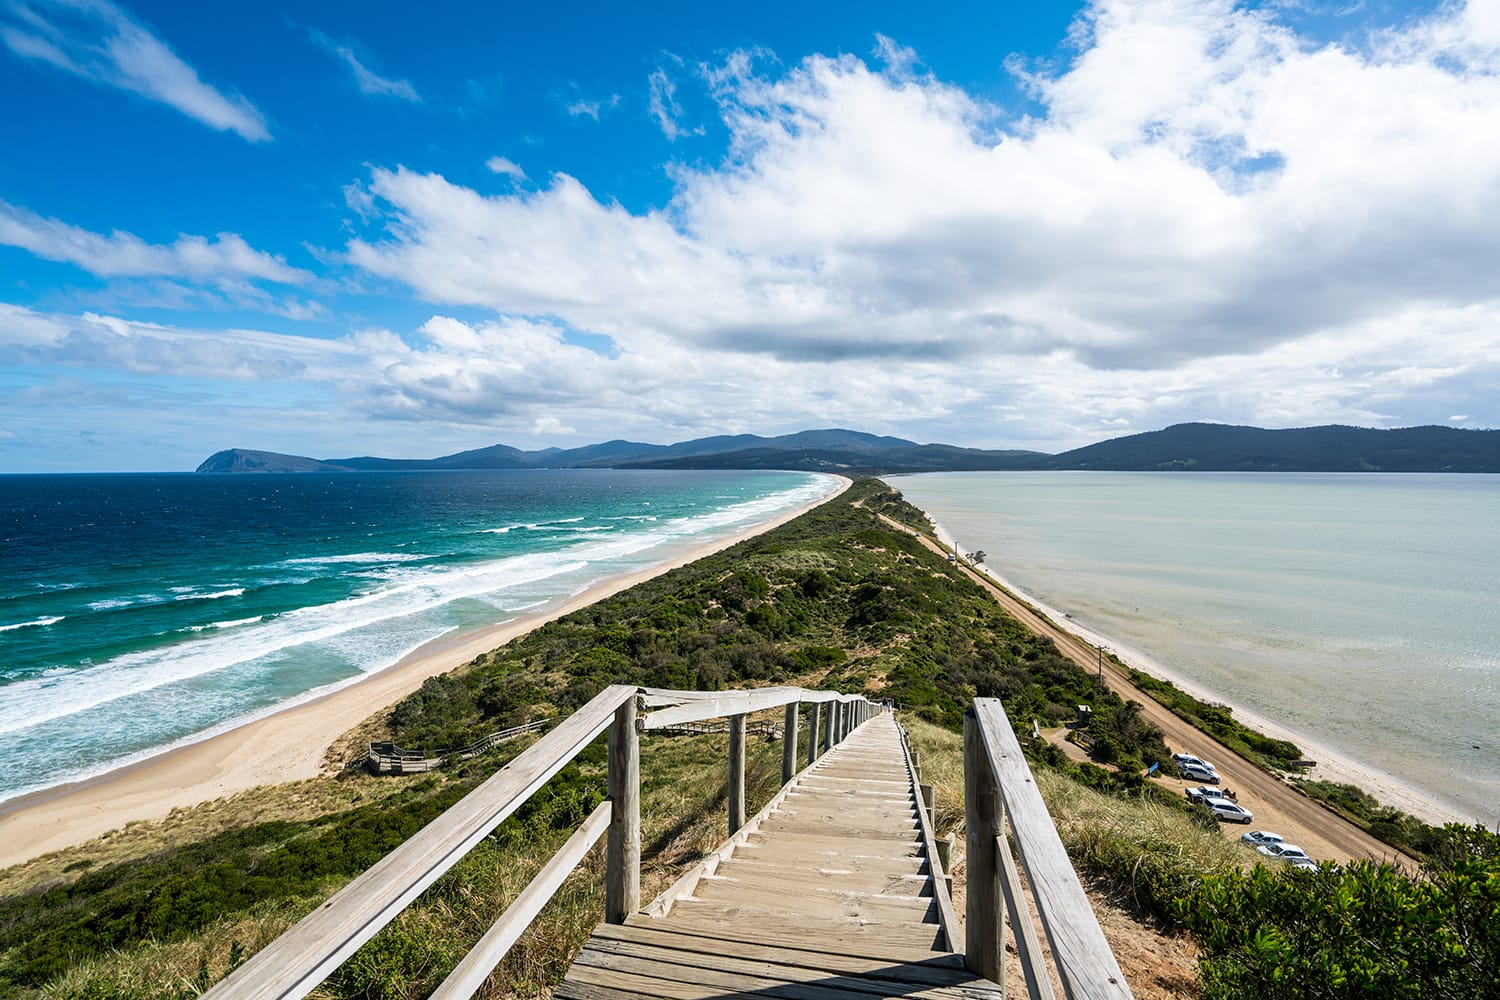 The Neck lookout on Bruny Island, Tasmania, Australia